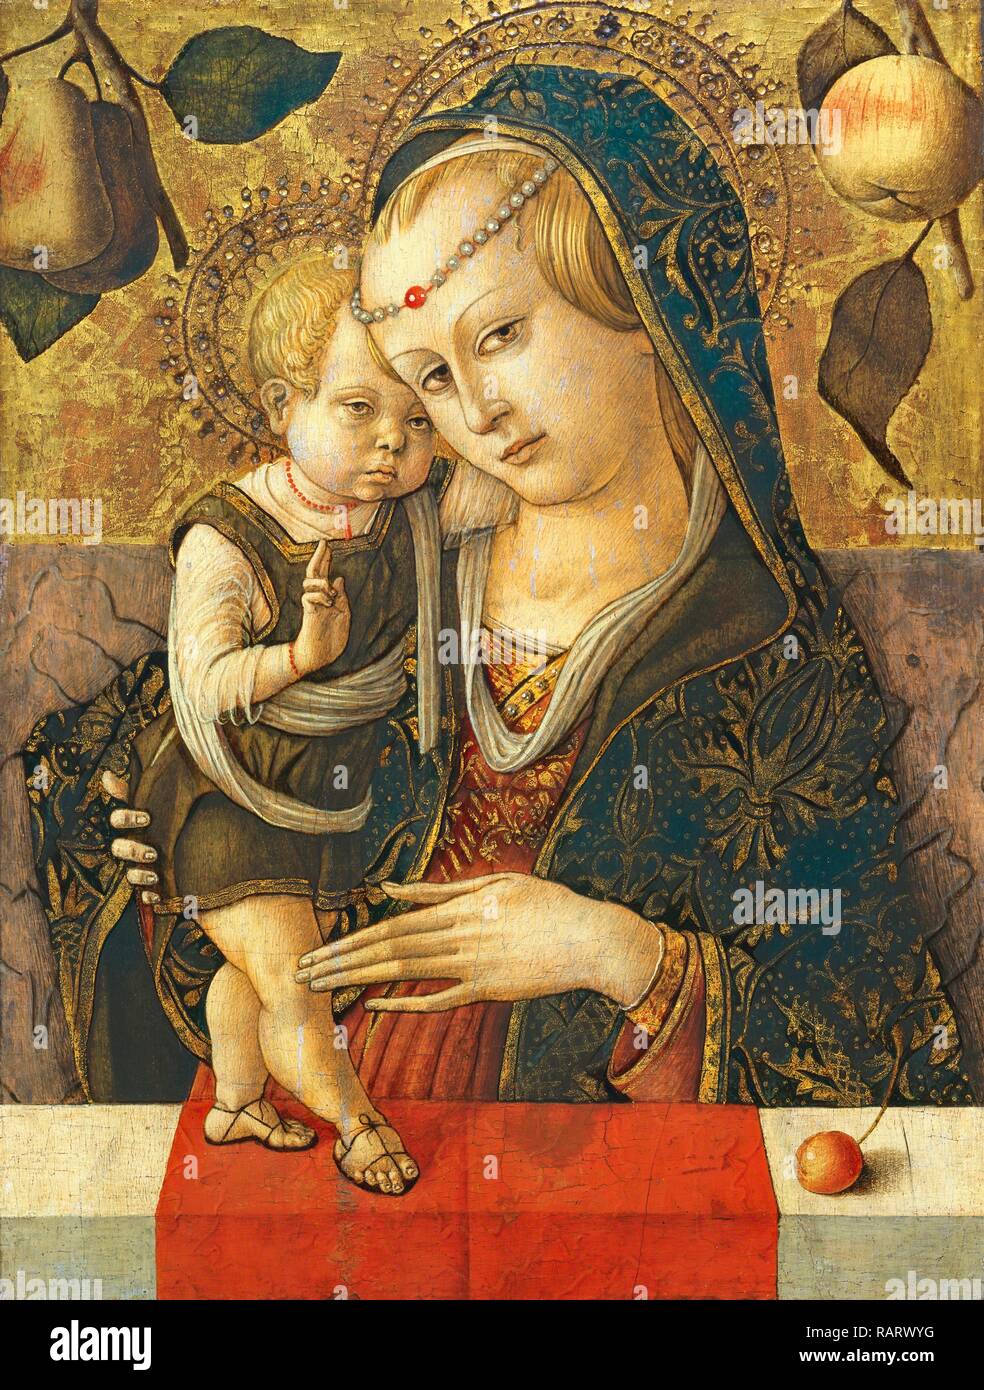 Carlo Crivelli, Madonna and Child, Italian, c. 1430-1435-1495, c. 1490, tempera on panel. Reimagined Stock Photo